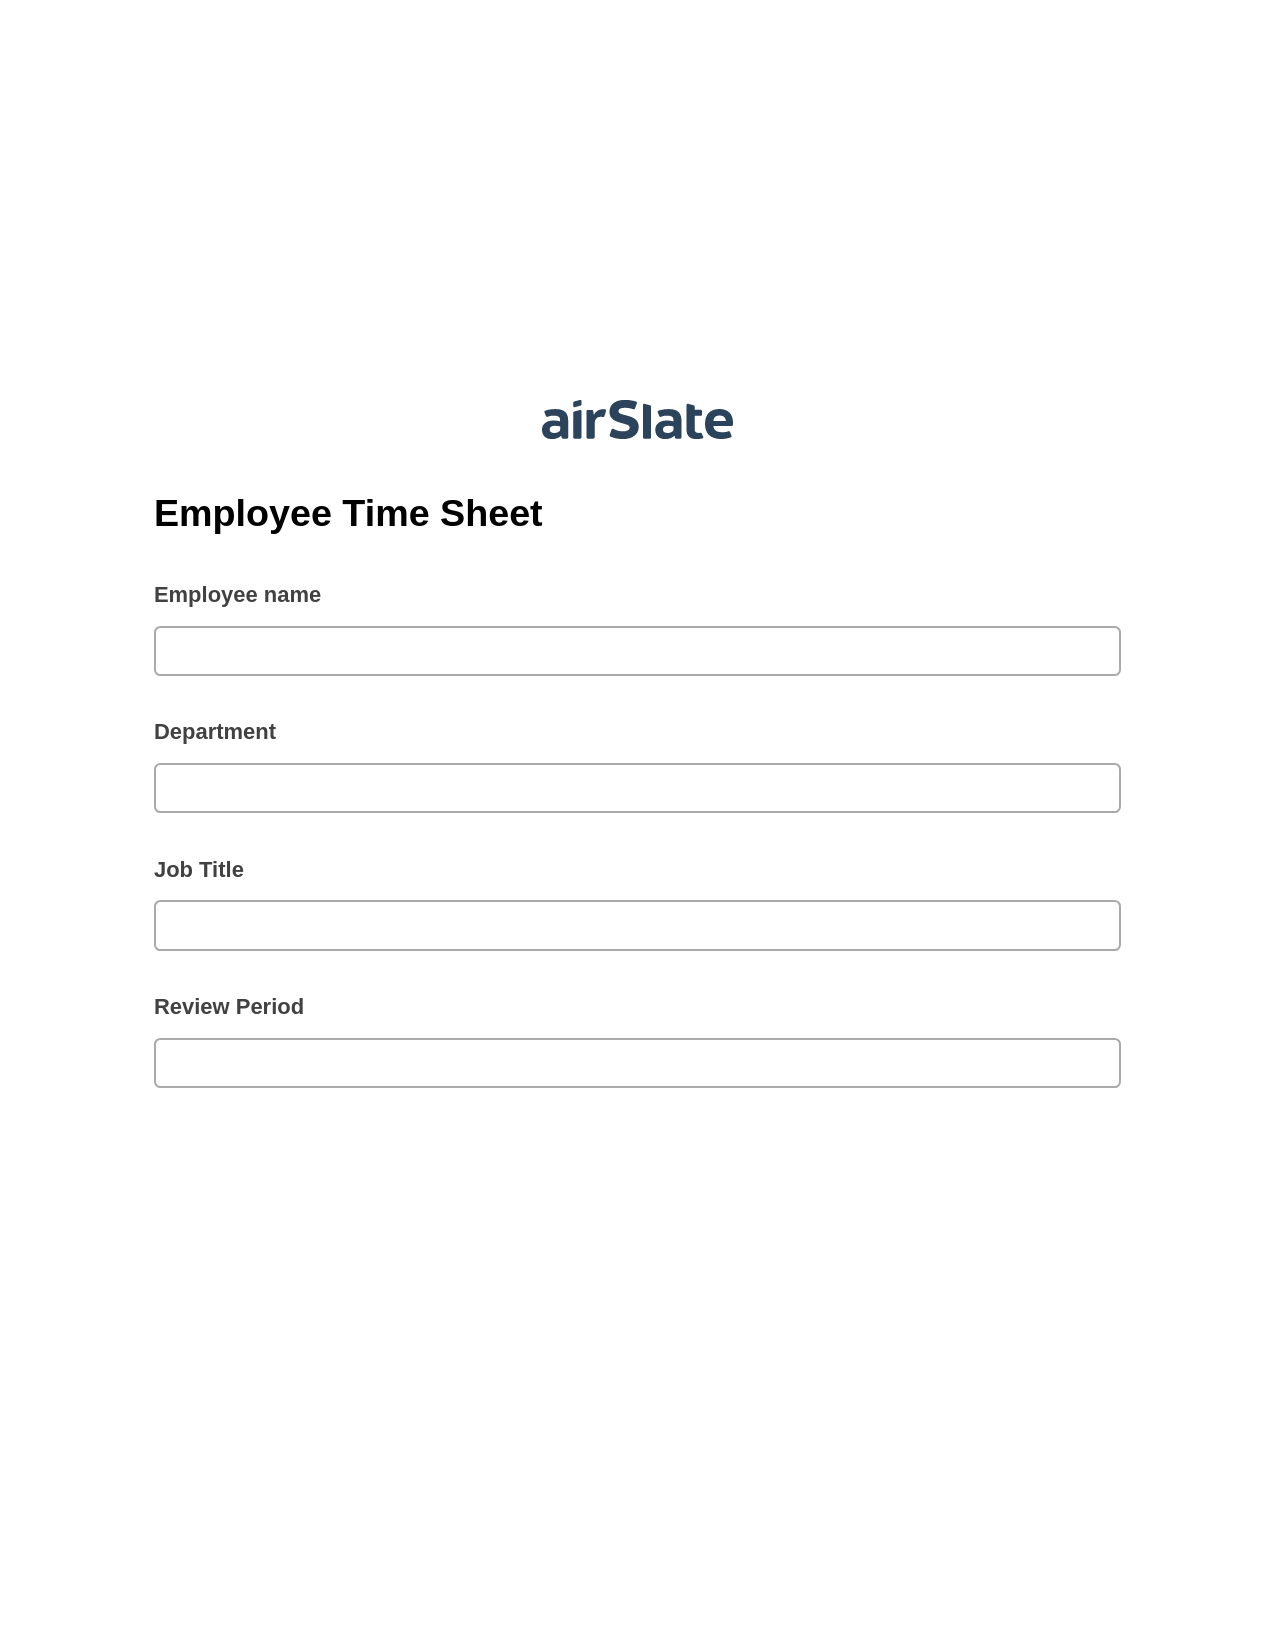 Employee Time Sheet Pre-fill from Excel Spreadsheet Bot, Update Audit Trail Bot, Webhook Postfinish Bot